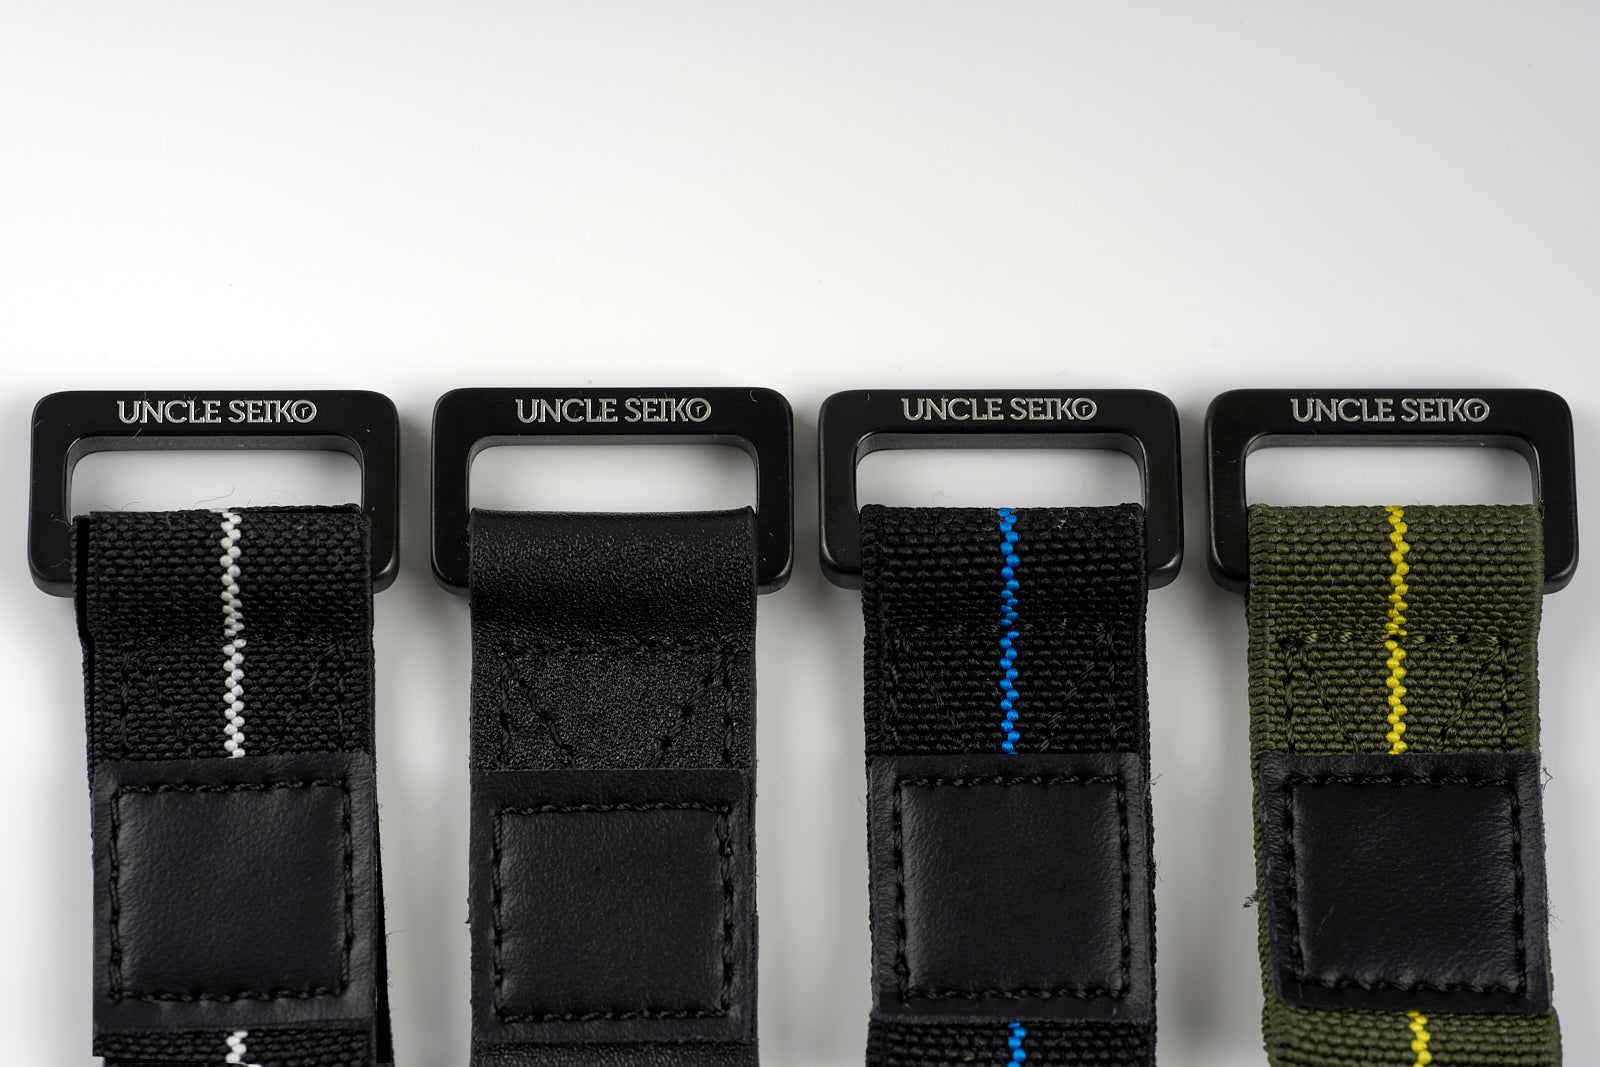 Velcro Watch Band